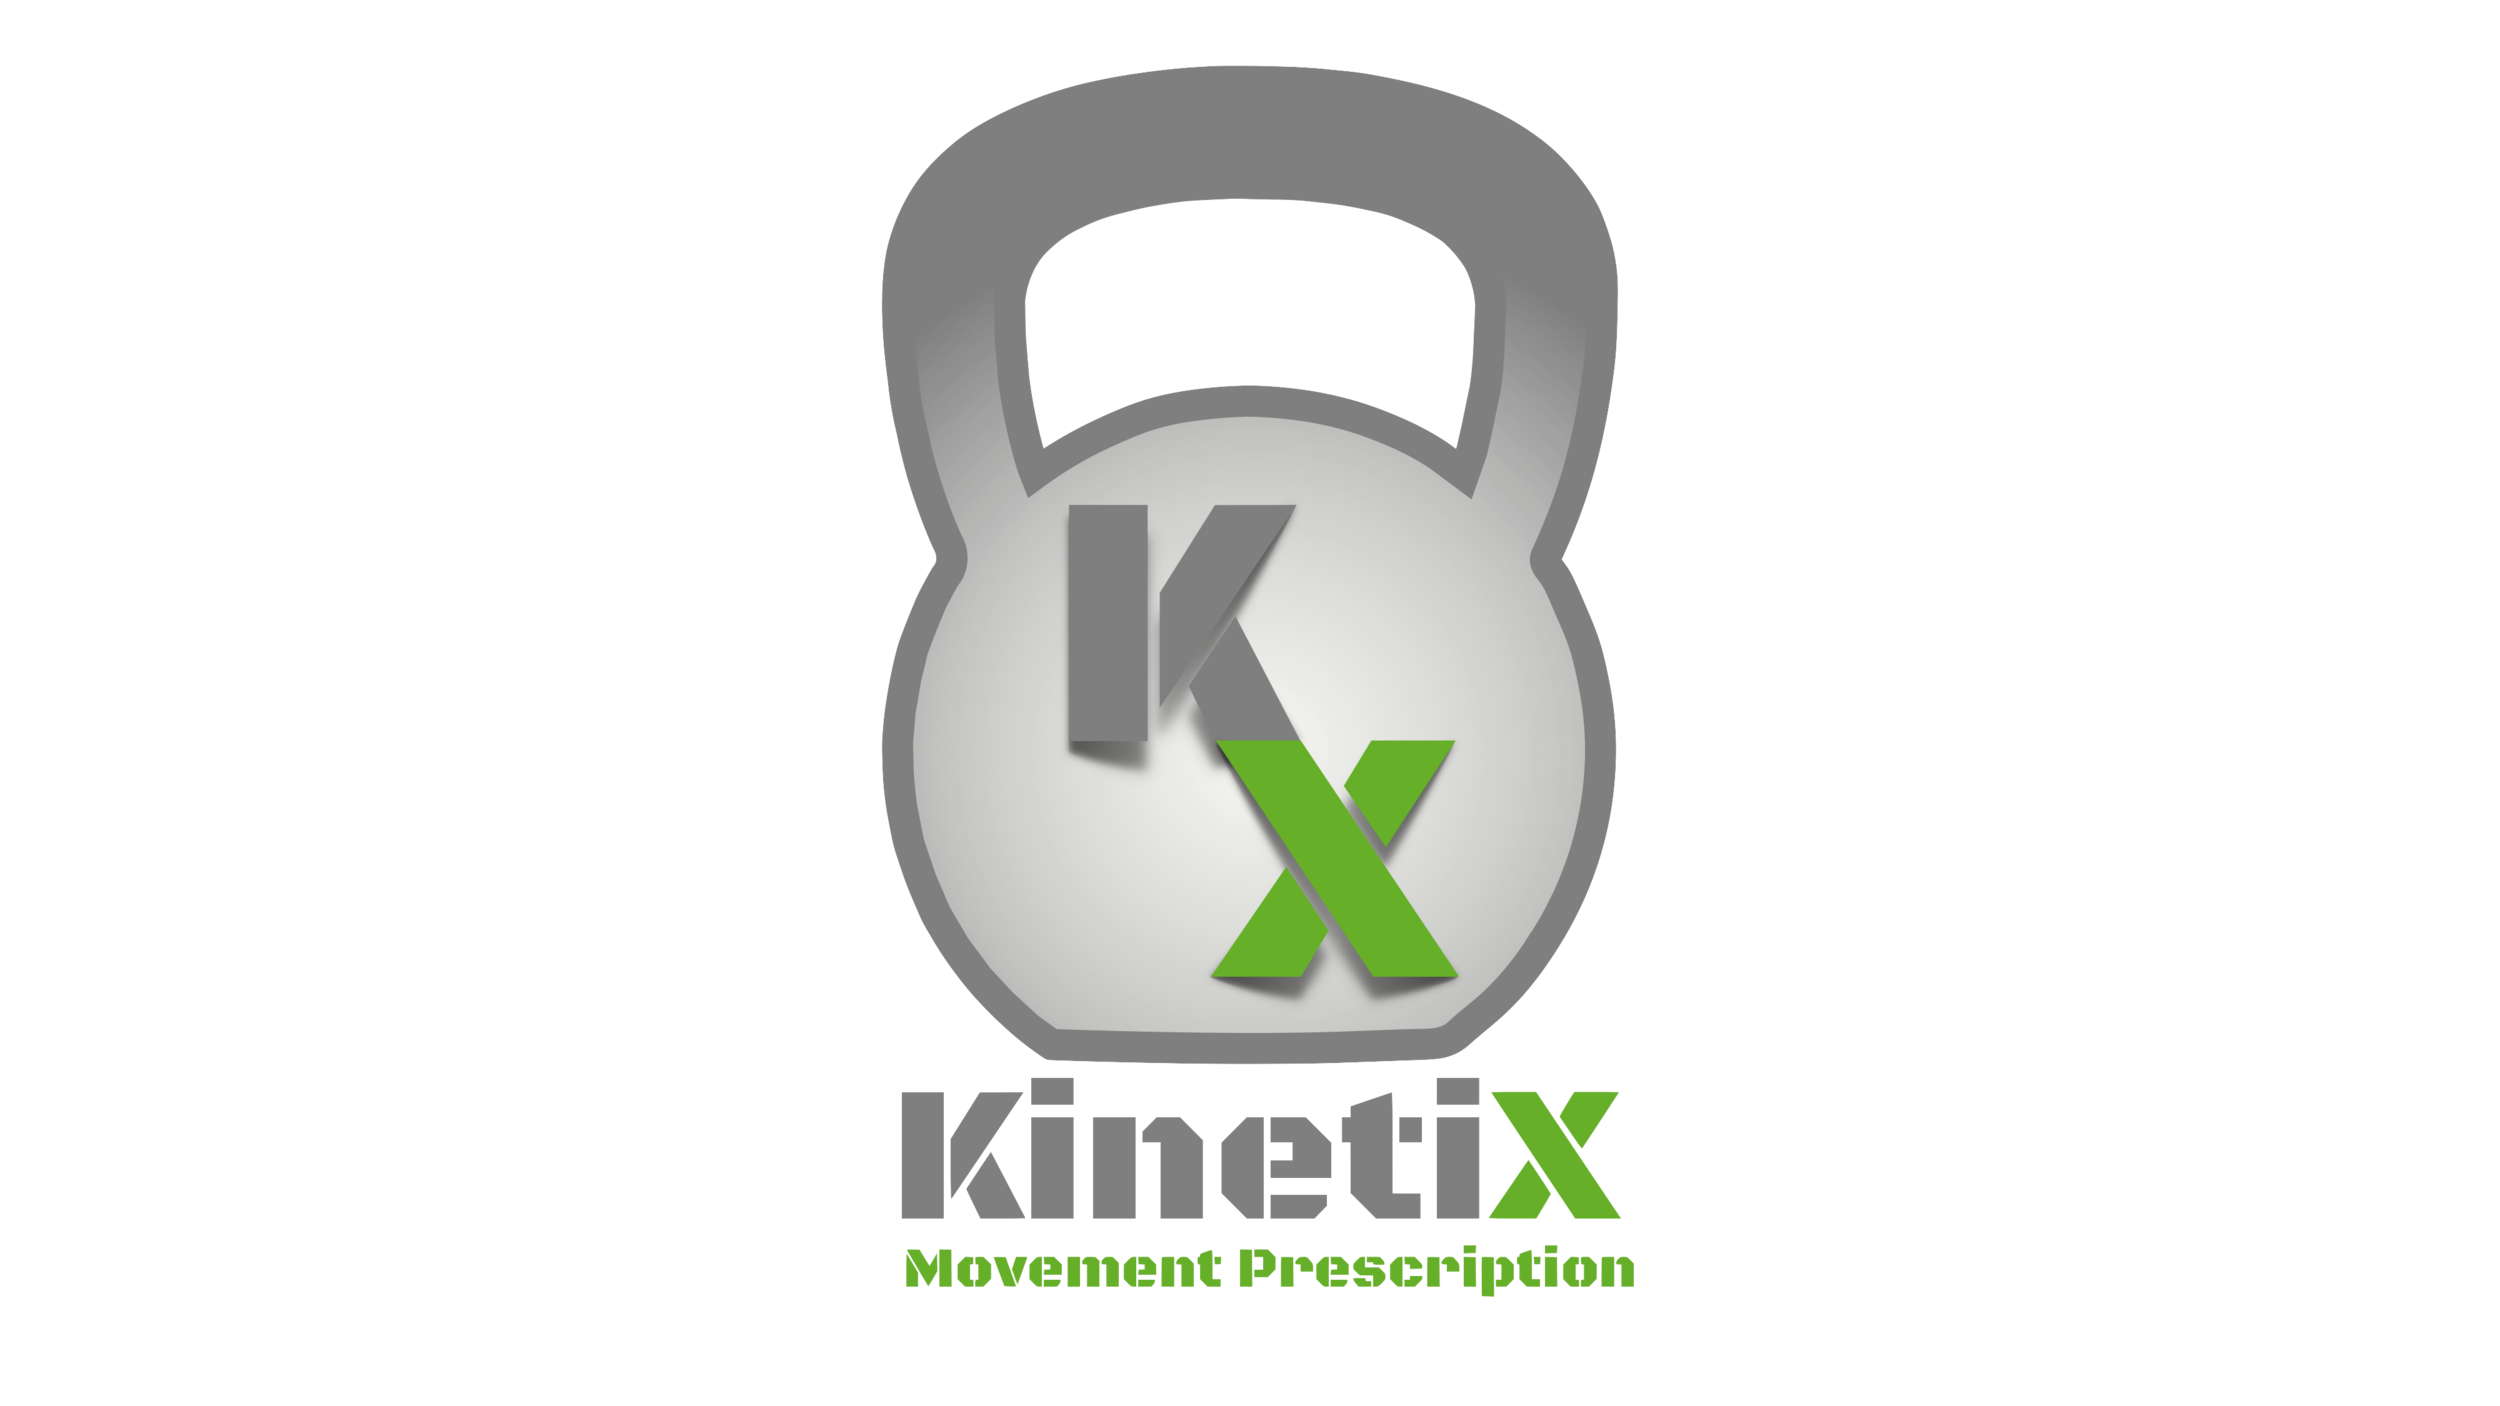 Kinetix Gradient 2 PNG.png